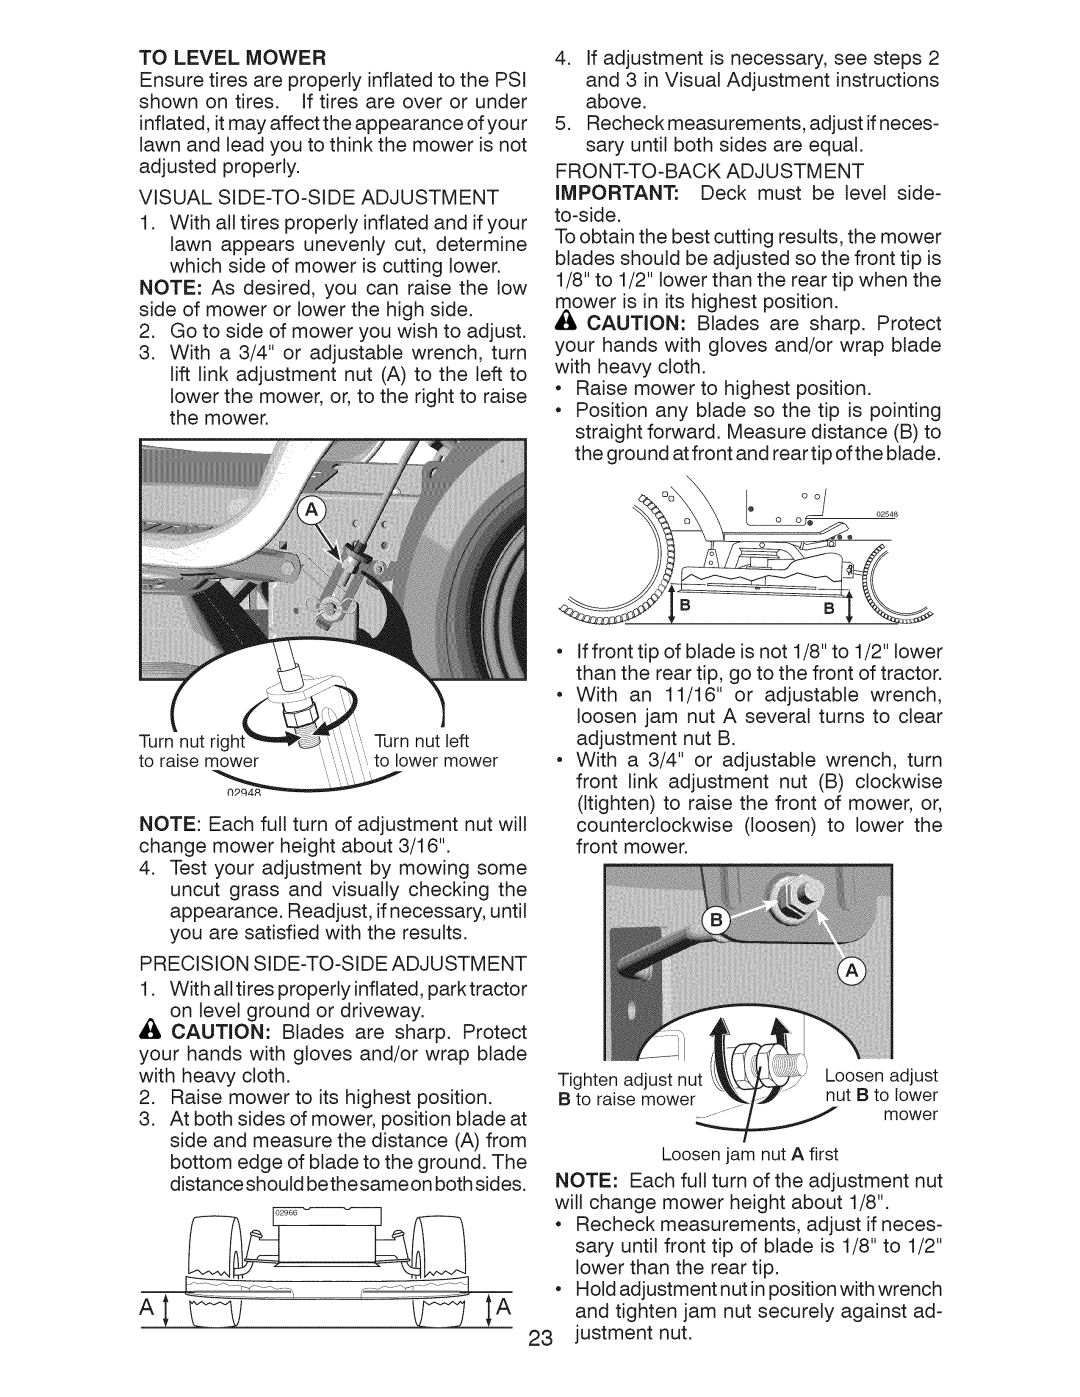 Craftsman 917.289244 owner manual Visual SIDE-TO-SIDE Adjustment, To Level Mower, Precision SIDE-TO-SIDE Adjustment 